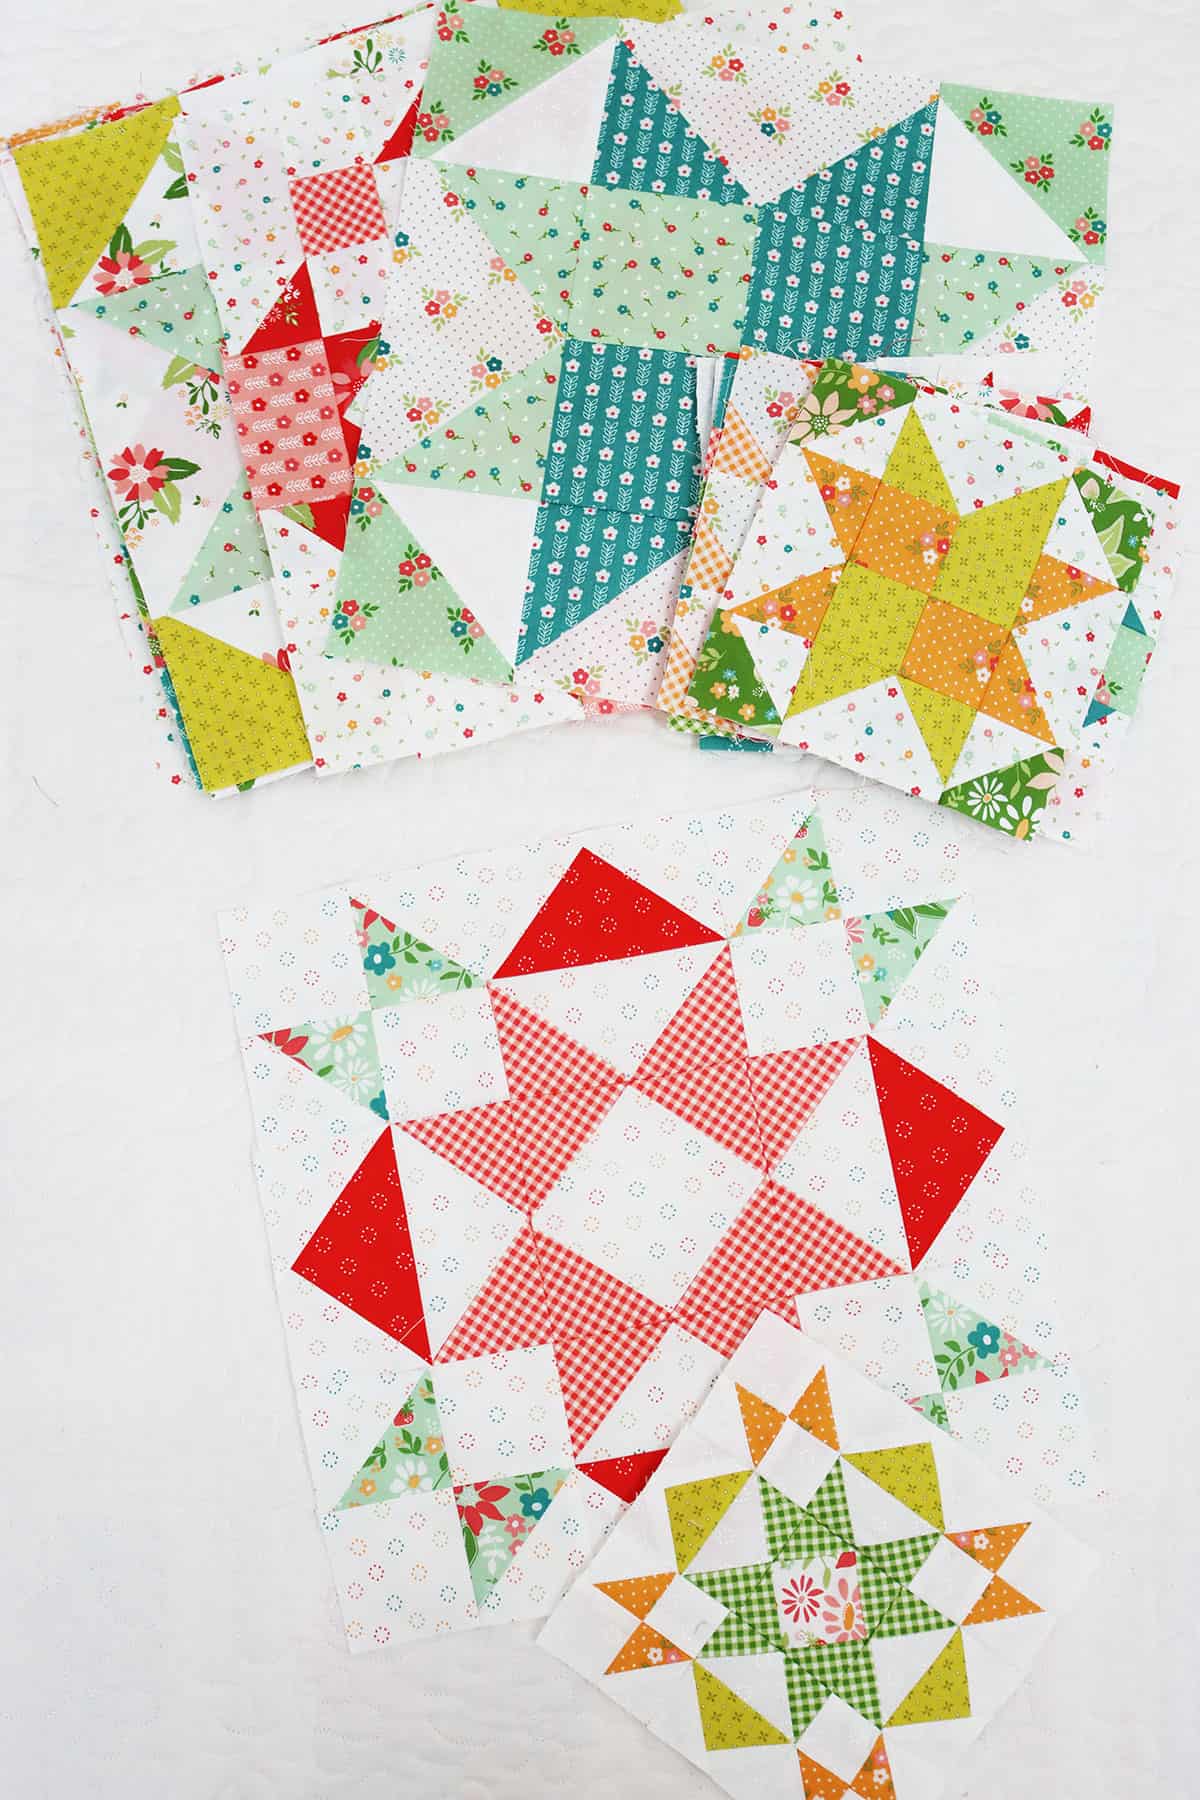 Moda Blockheads 5 quilt blocks by Sherri McConnell in Strawberry Lemonade fabrics